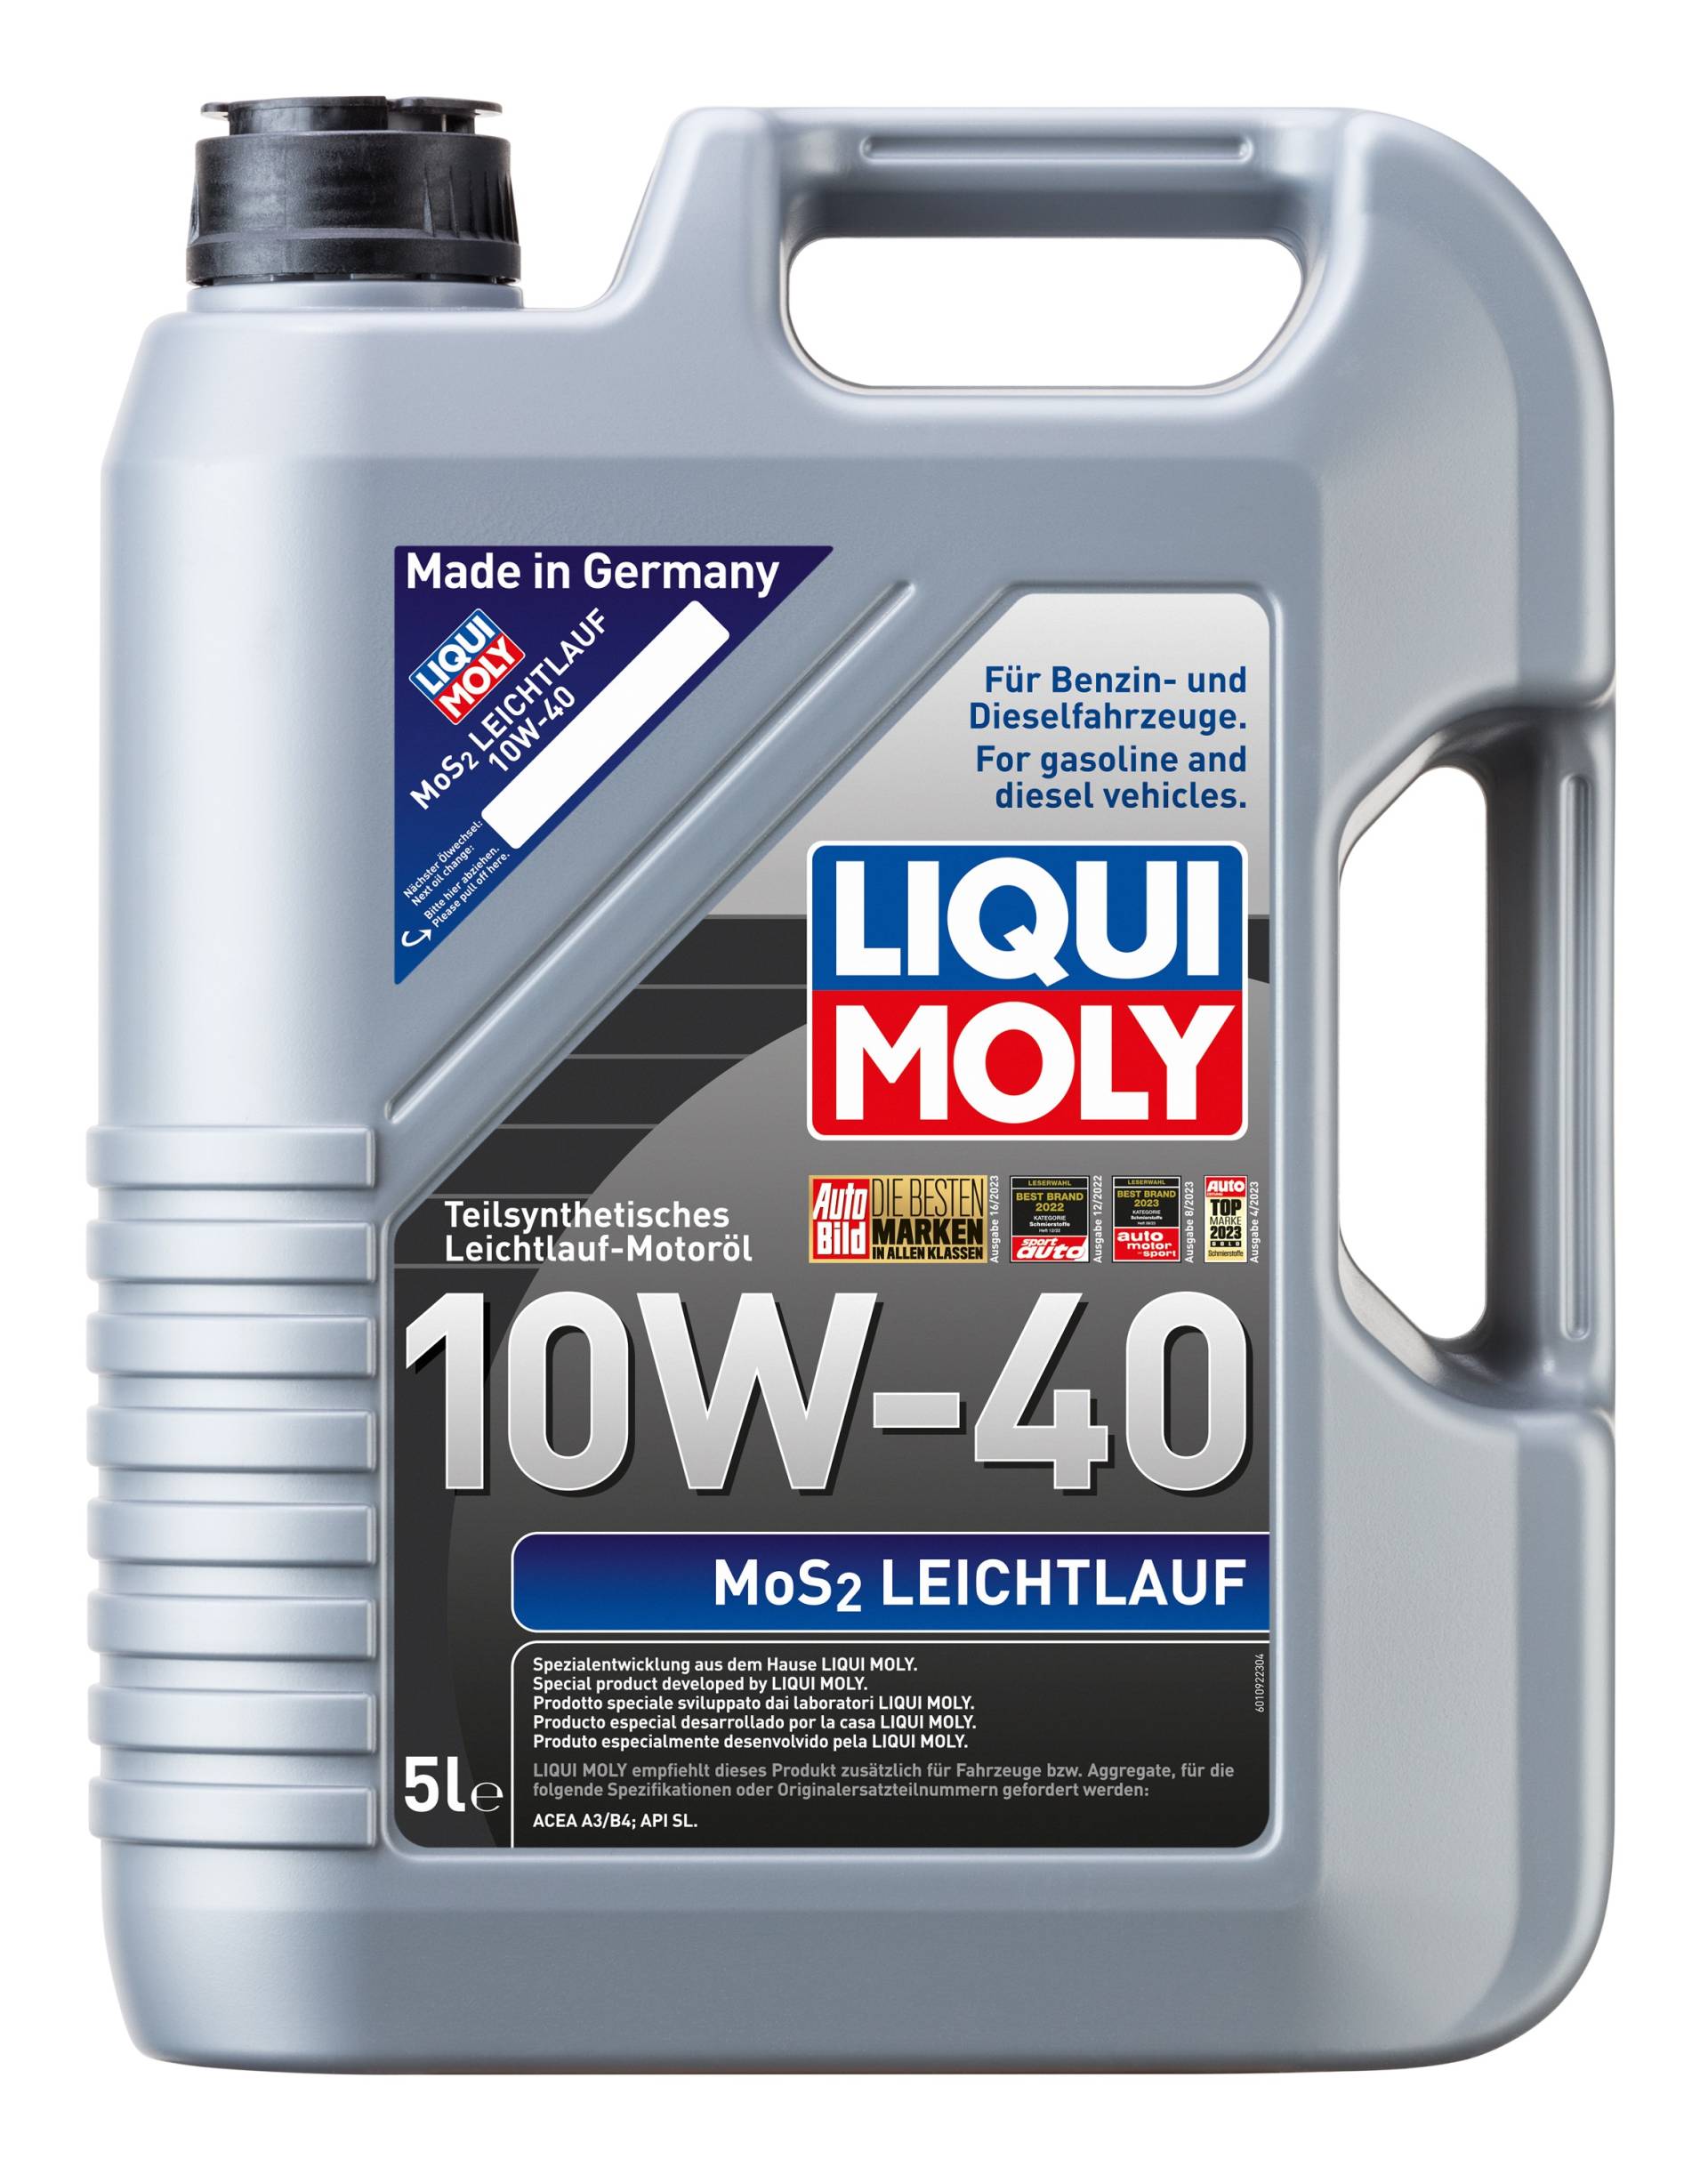 Liqui Moly Mos2 Leichtlauf 10W-40 Motoröl , 5 Liter von Liqui Moly